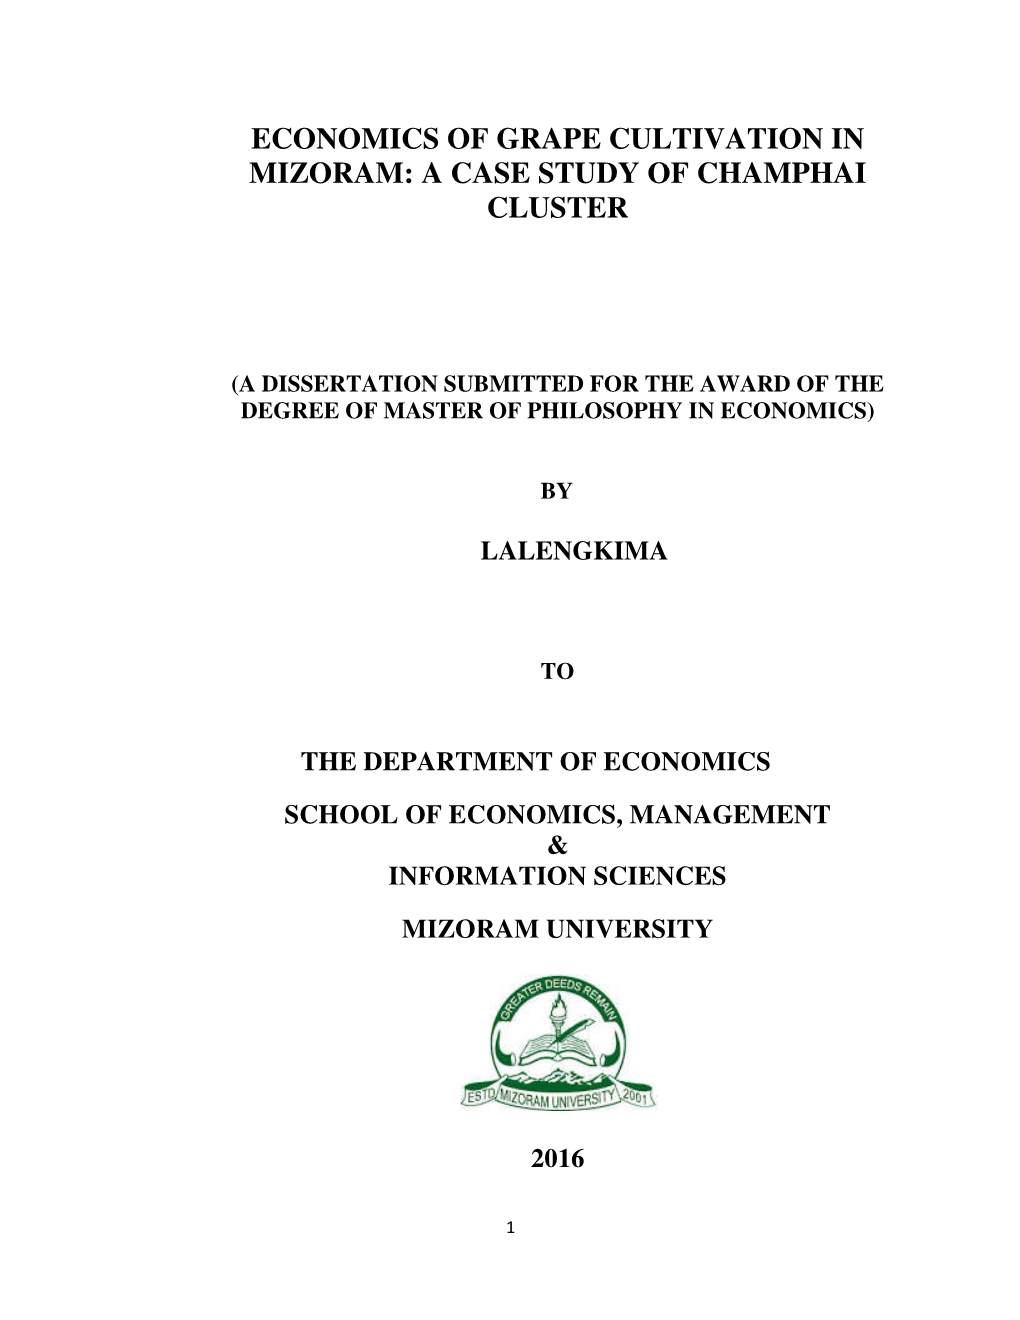 Economics of Grape Cultivation in Mizoram: a Case Study of Champhai Cluster